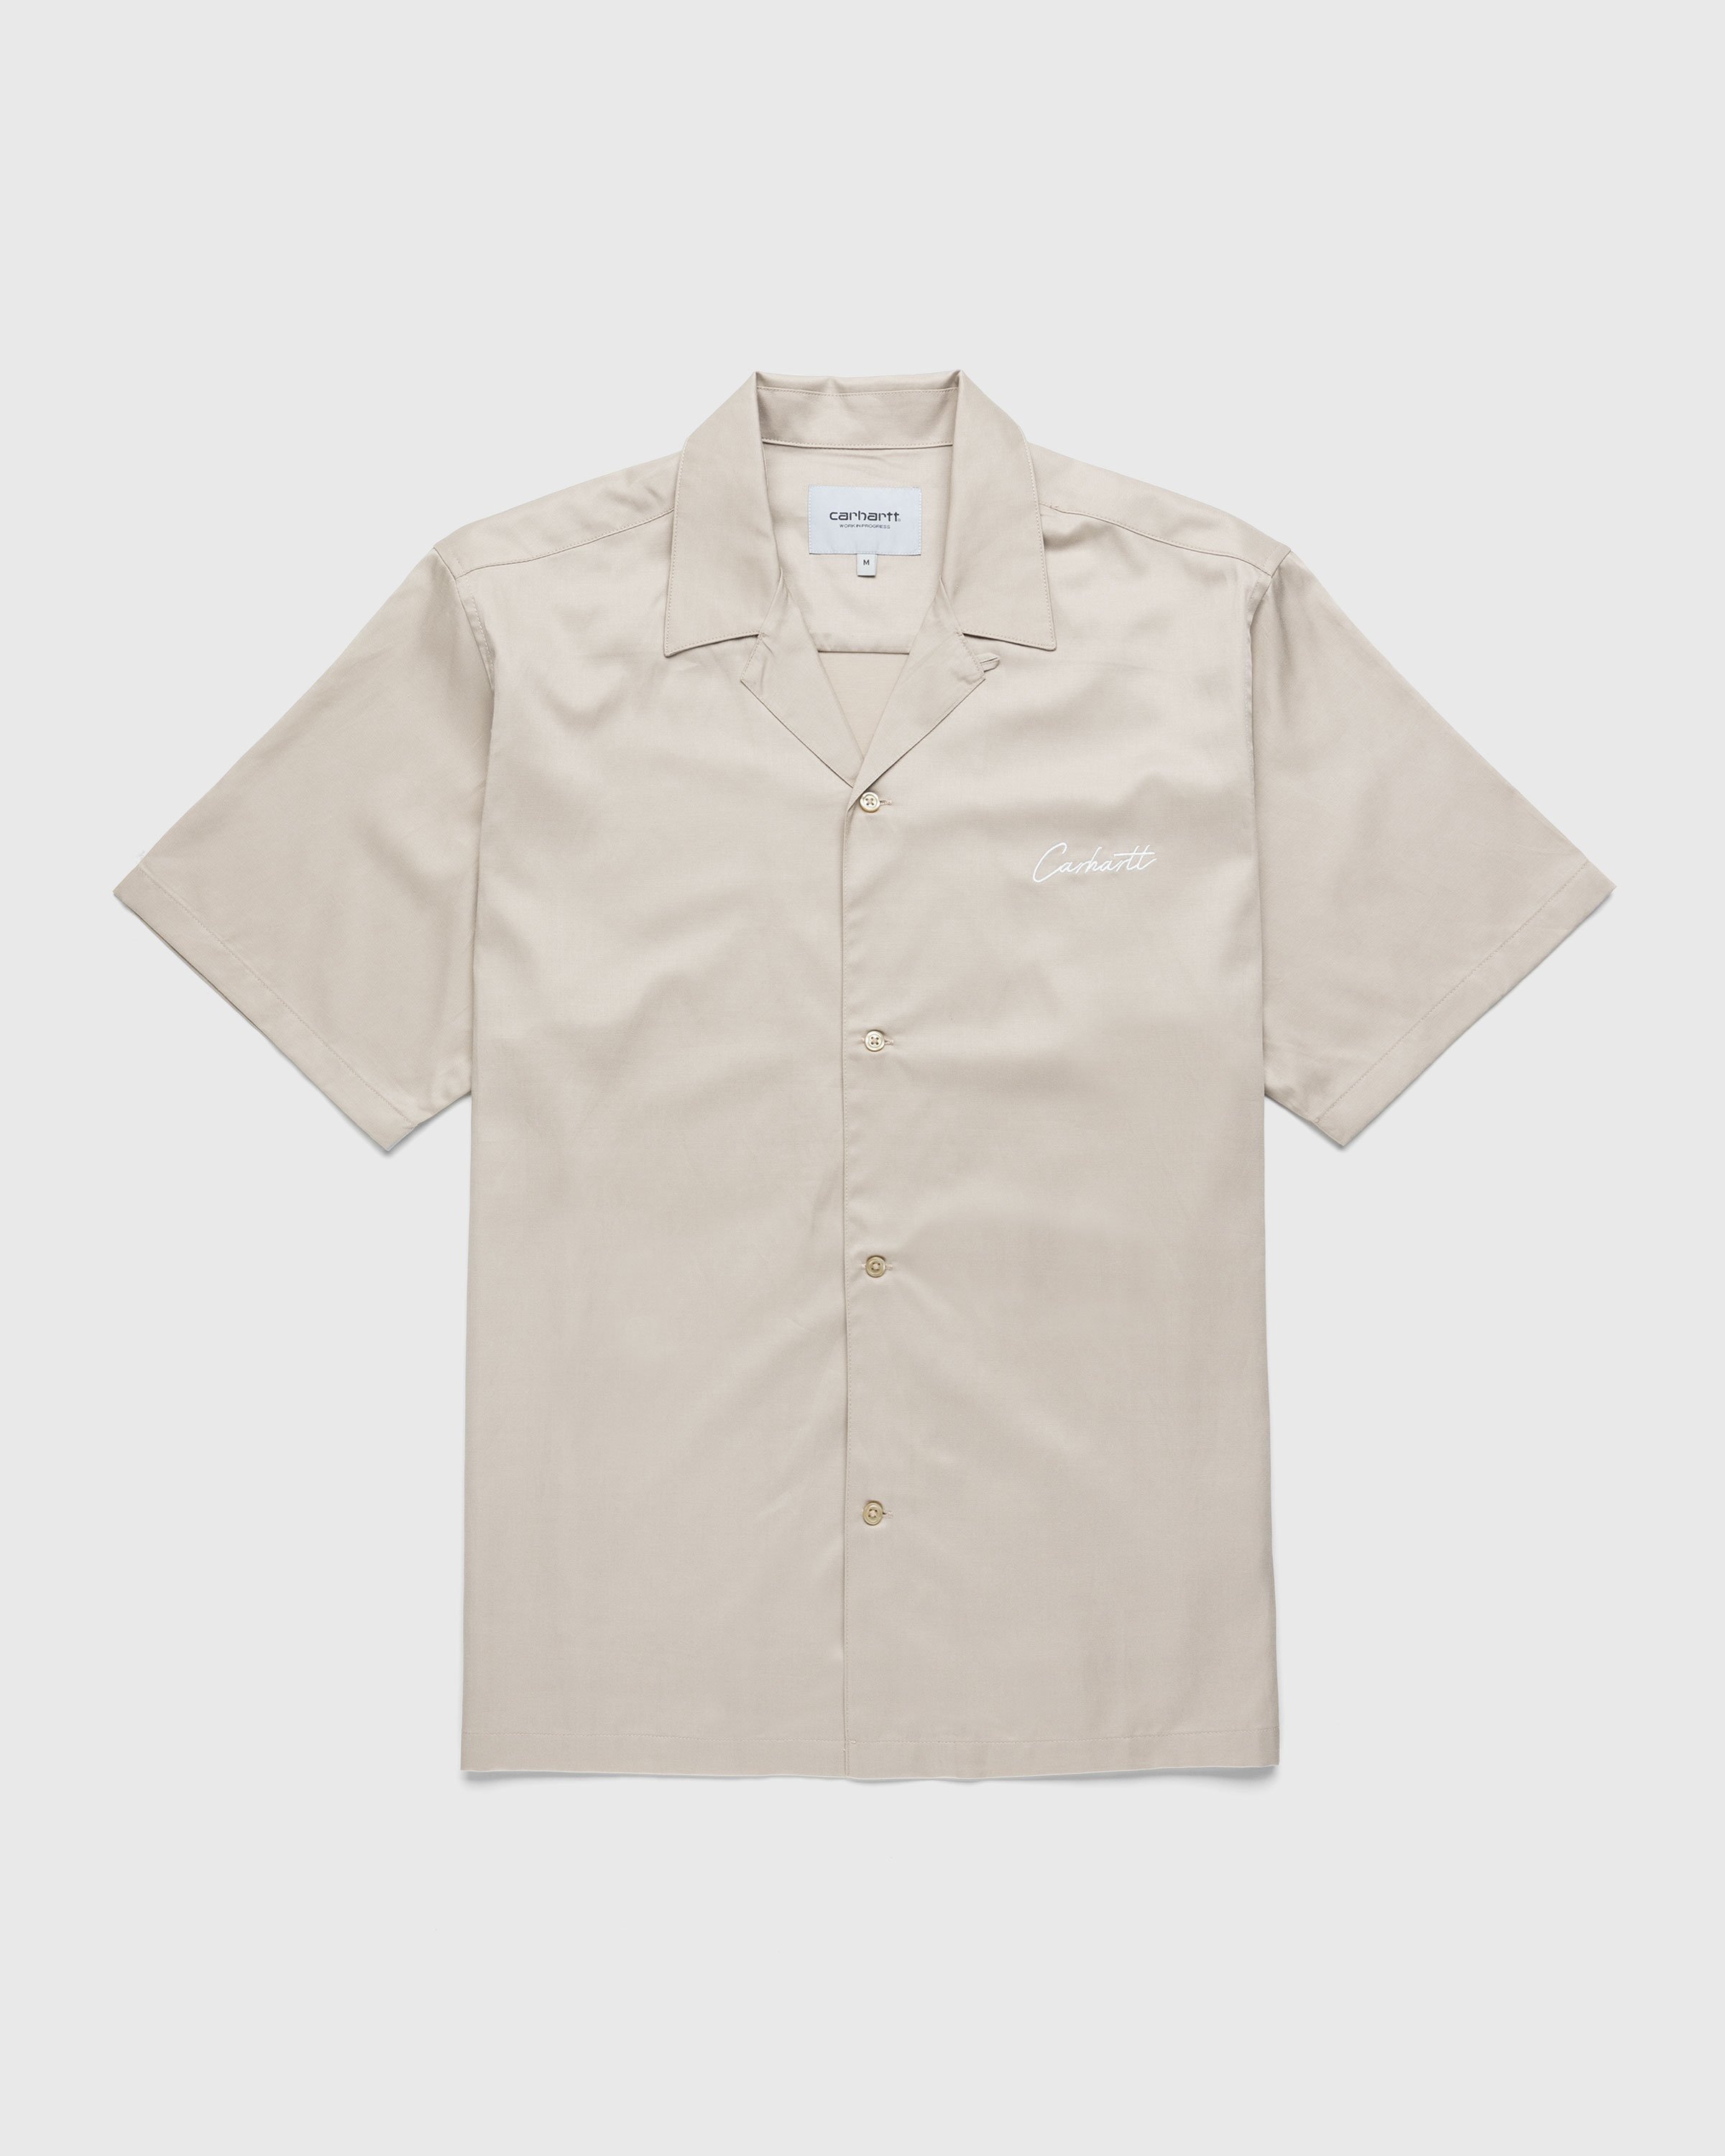 Carhartt WIP - Delray Shirt Wall/Wax - Clothing - Beige - Image 1